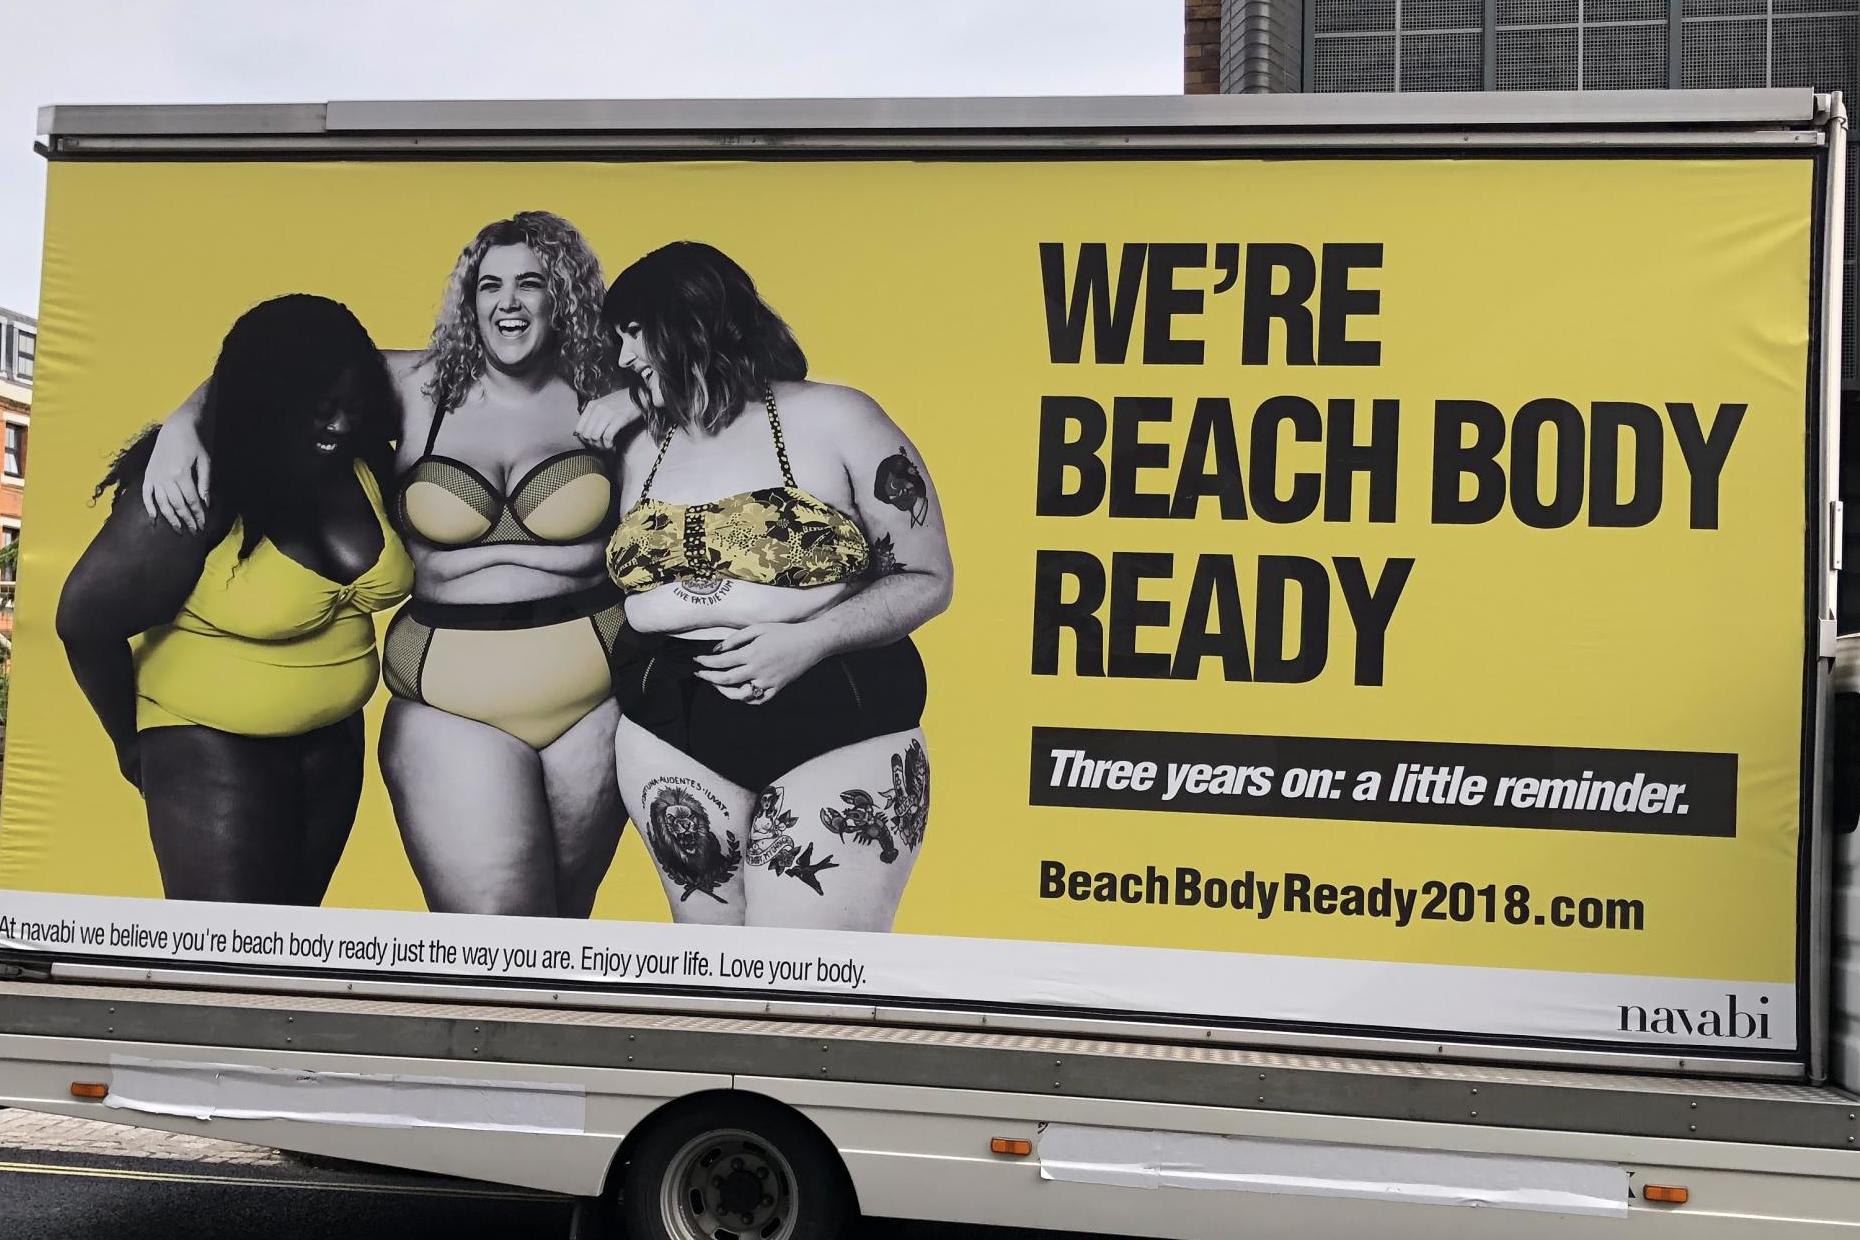 The navabi 'Beach Body Ready' campaign celebrates women of all sizes